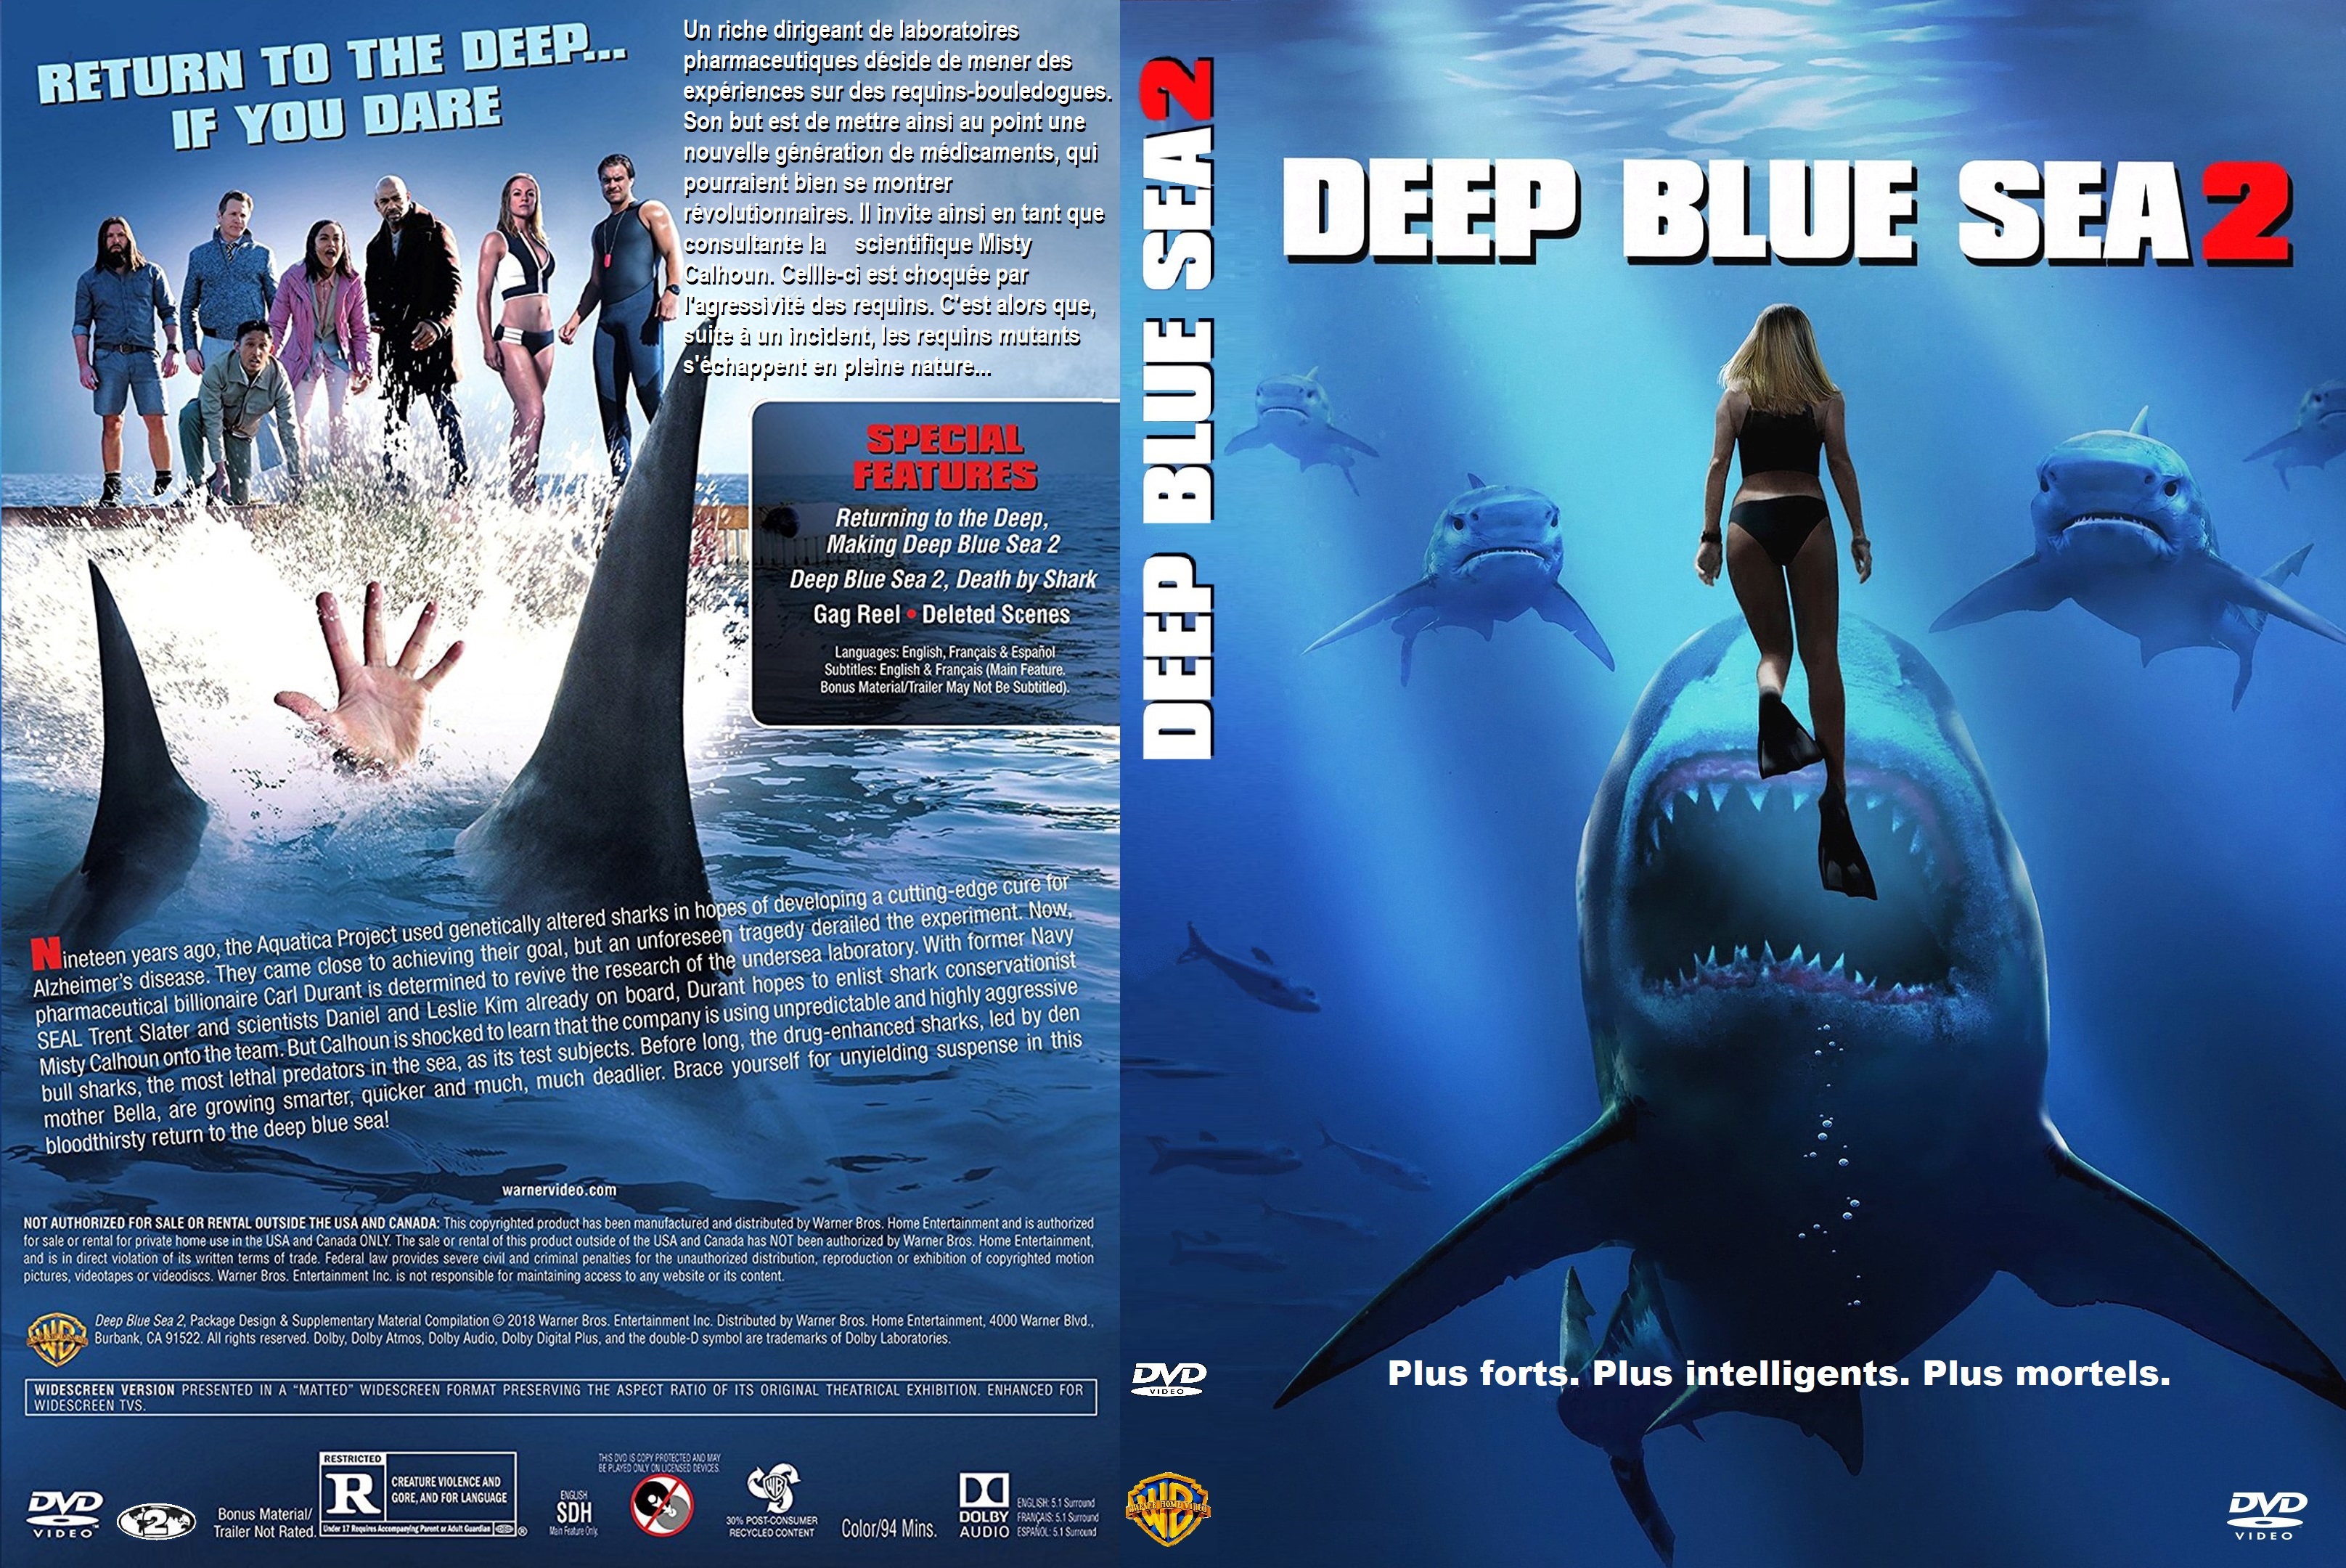 Jaquette DVD Deep Blue Sea 2 custom